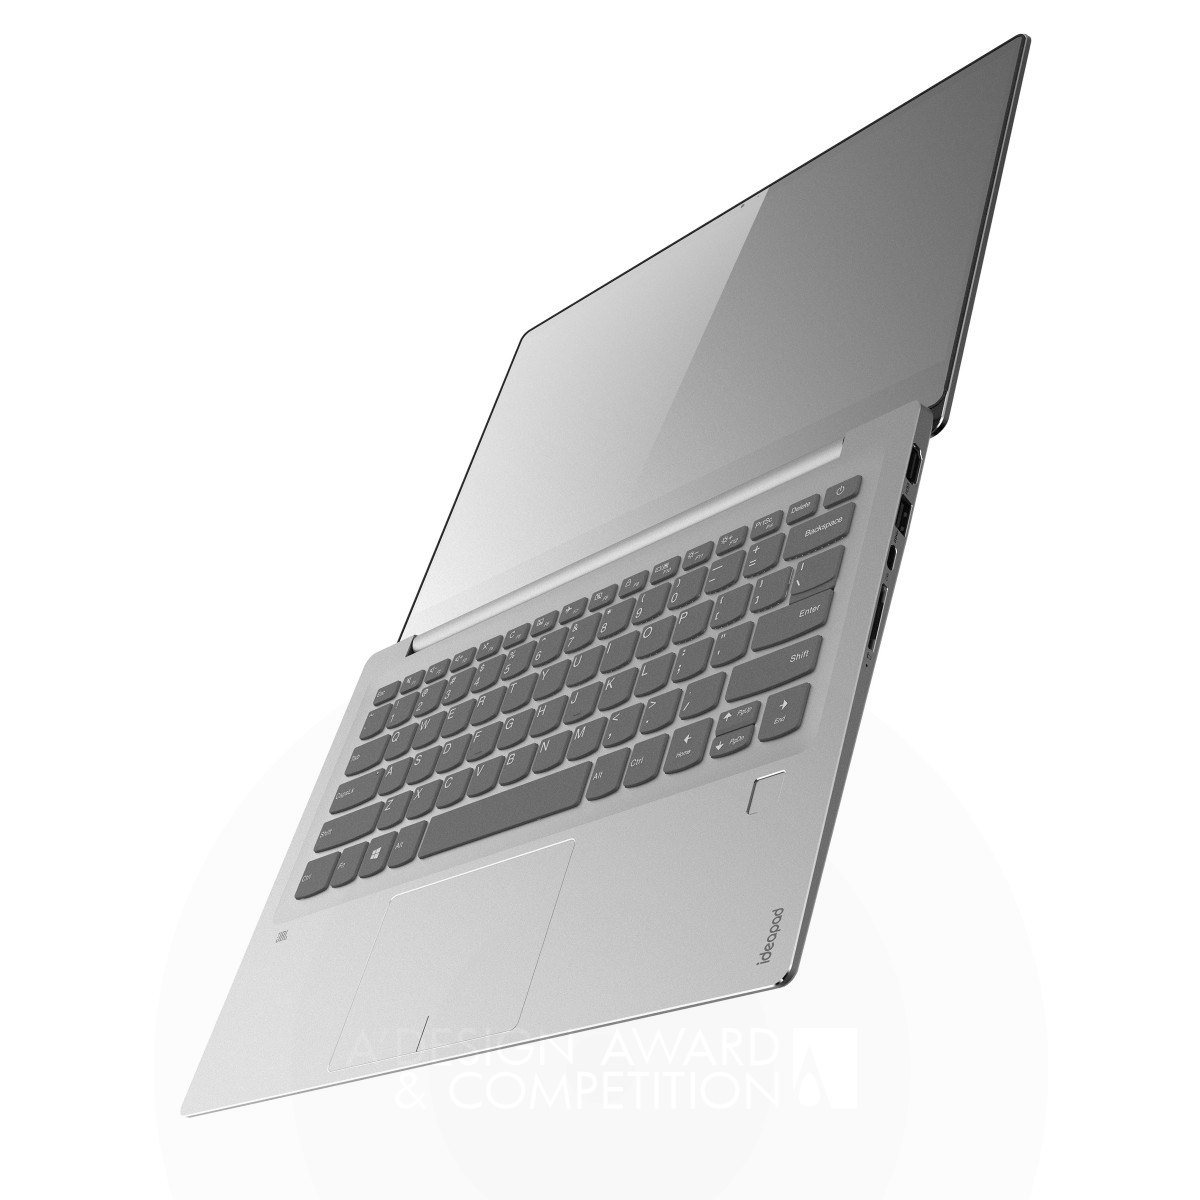 Lenovo's Ideapad 720S: A Revolution in Laptop Design